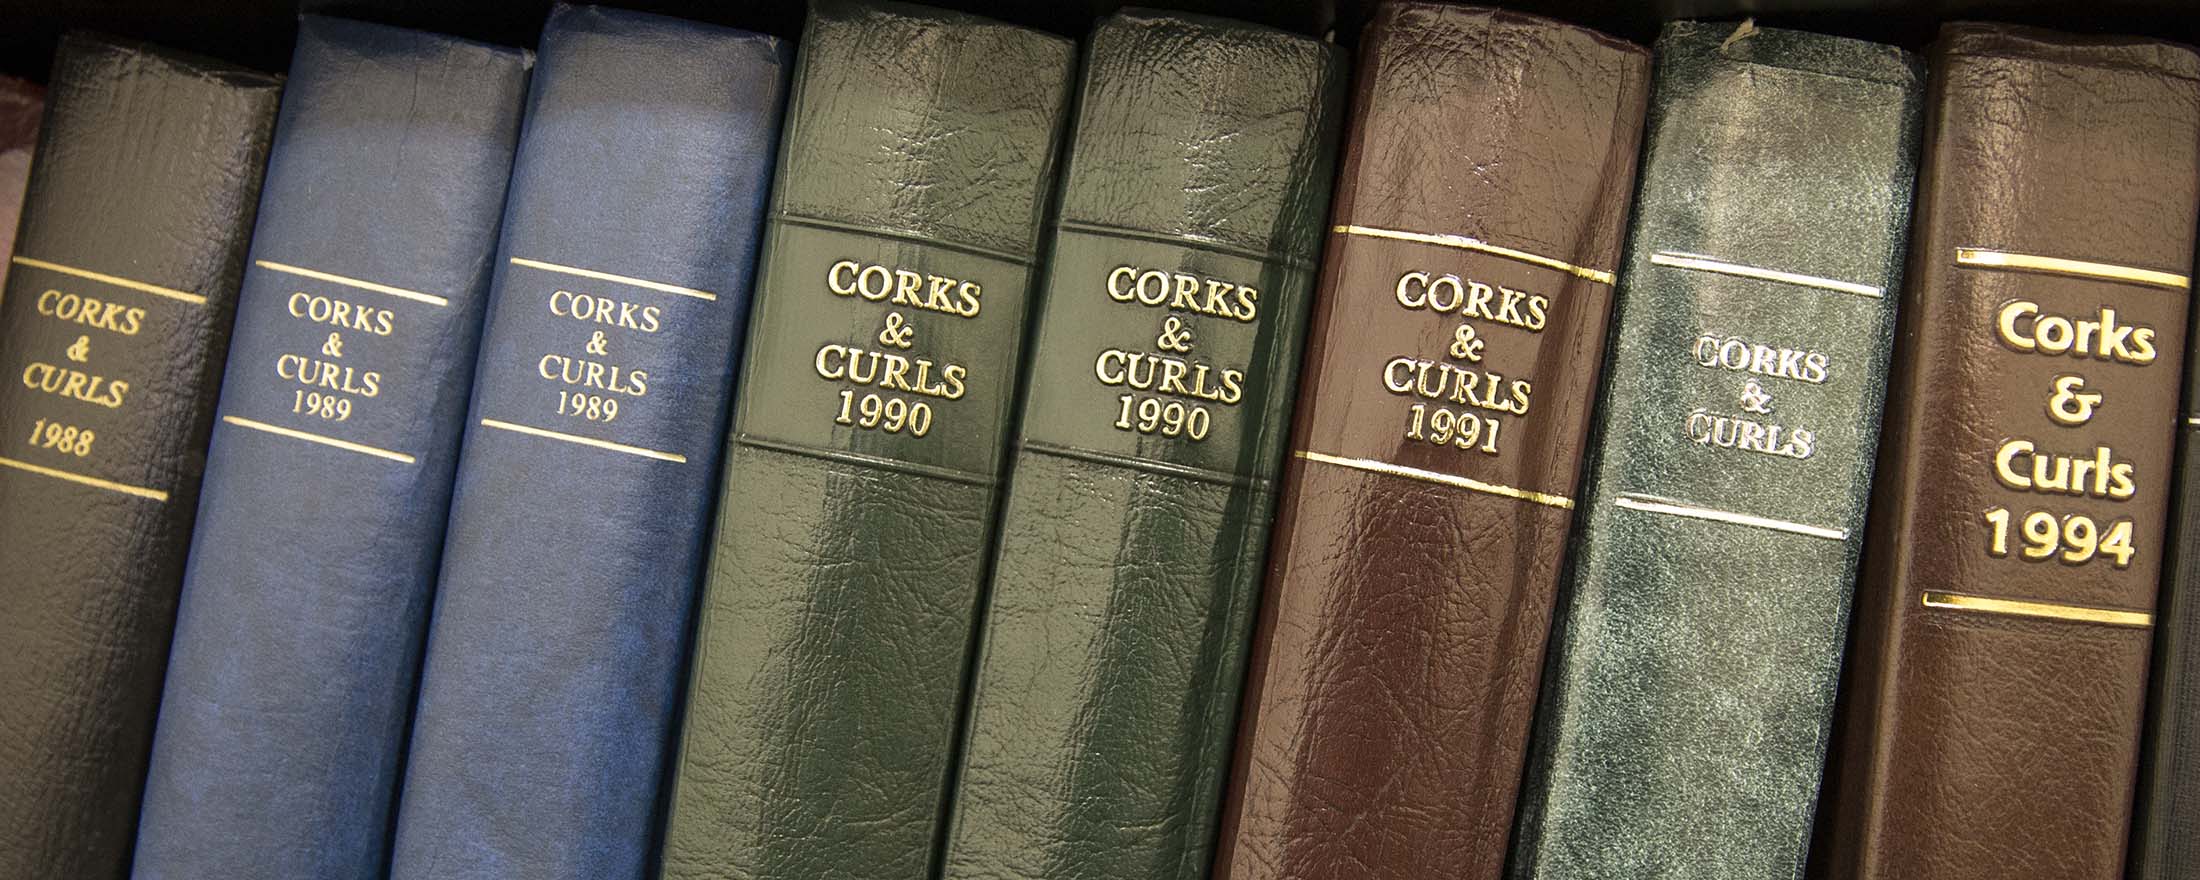 Yearly Corks & Curls books on a bookshelf